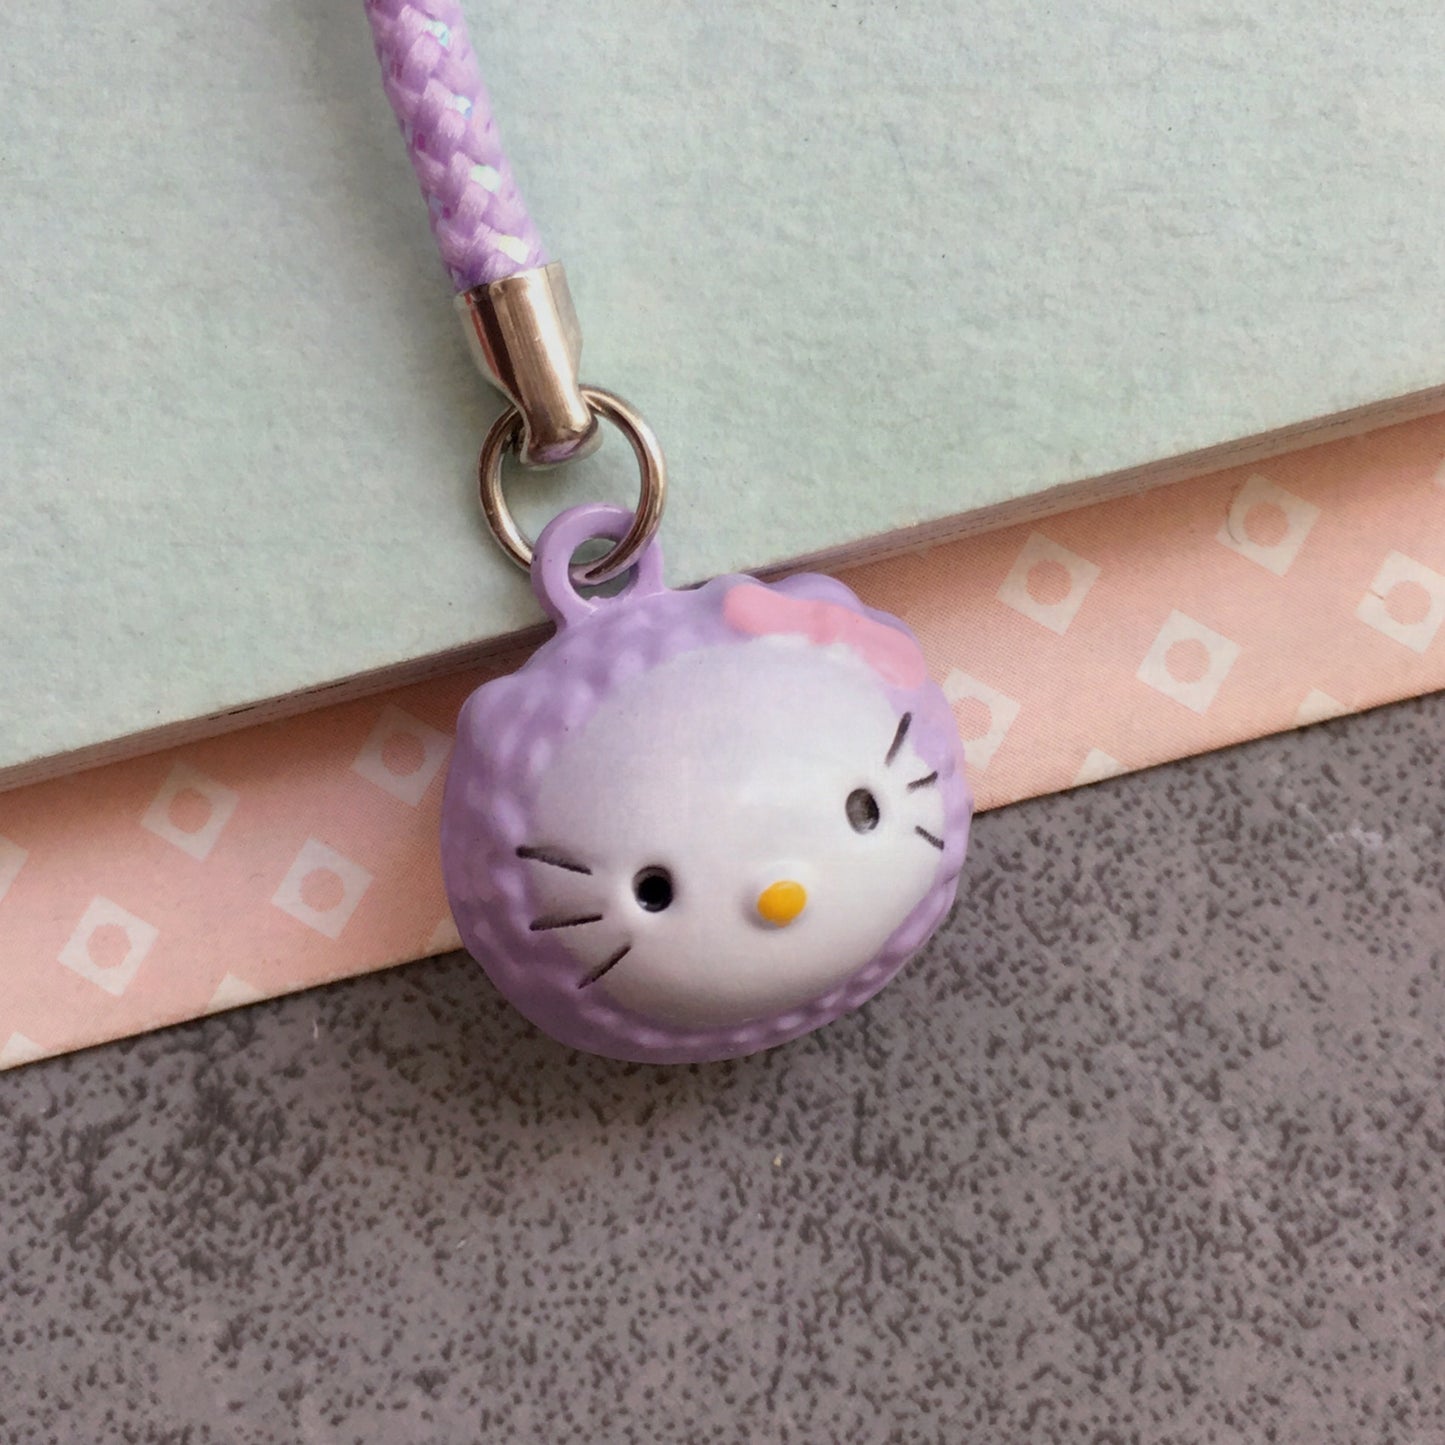 Charms - Kawaii Sanrio Hello Kitty Accessories Mini Bells Charms Phone Charms Key Rings School Bag Charms Decorations Girl Friend Gifts